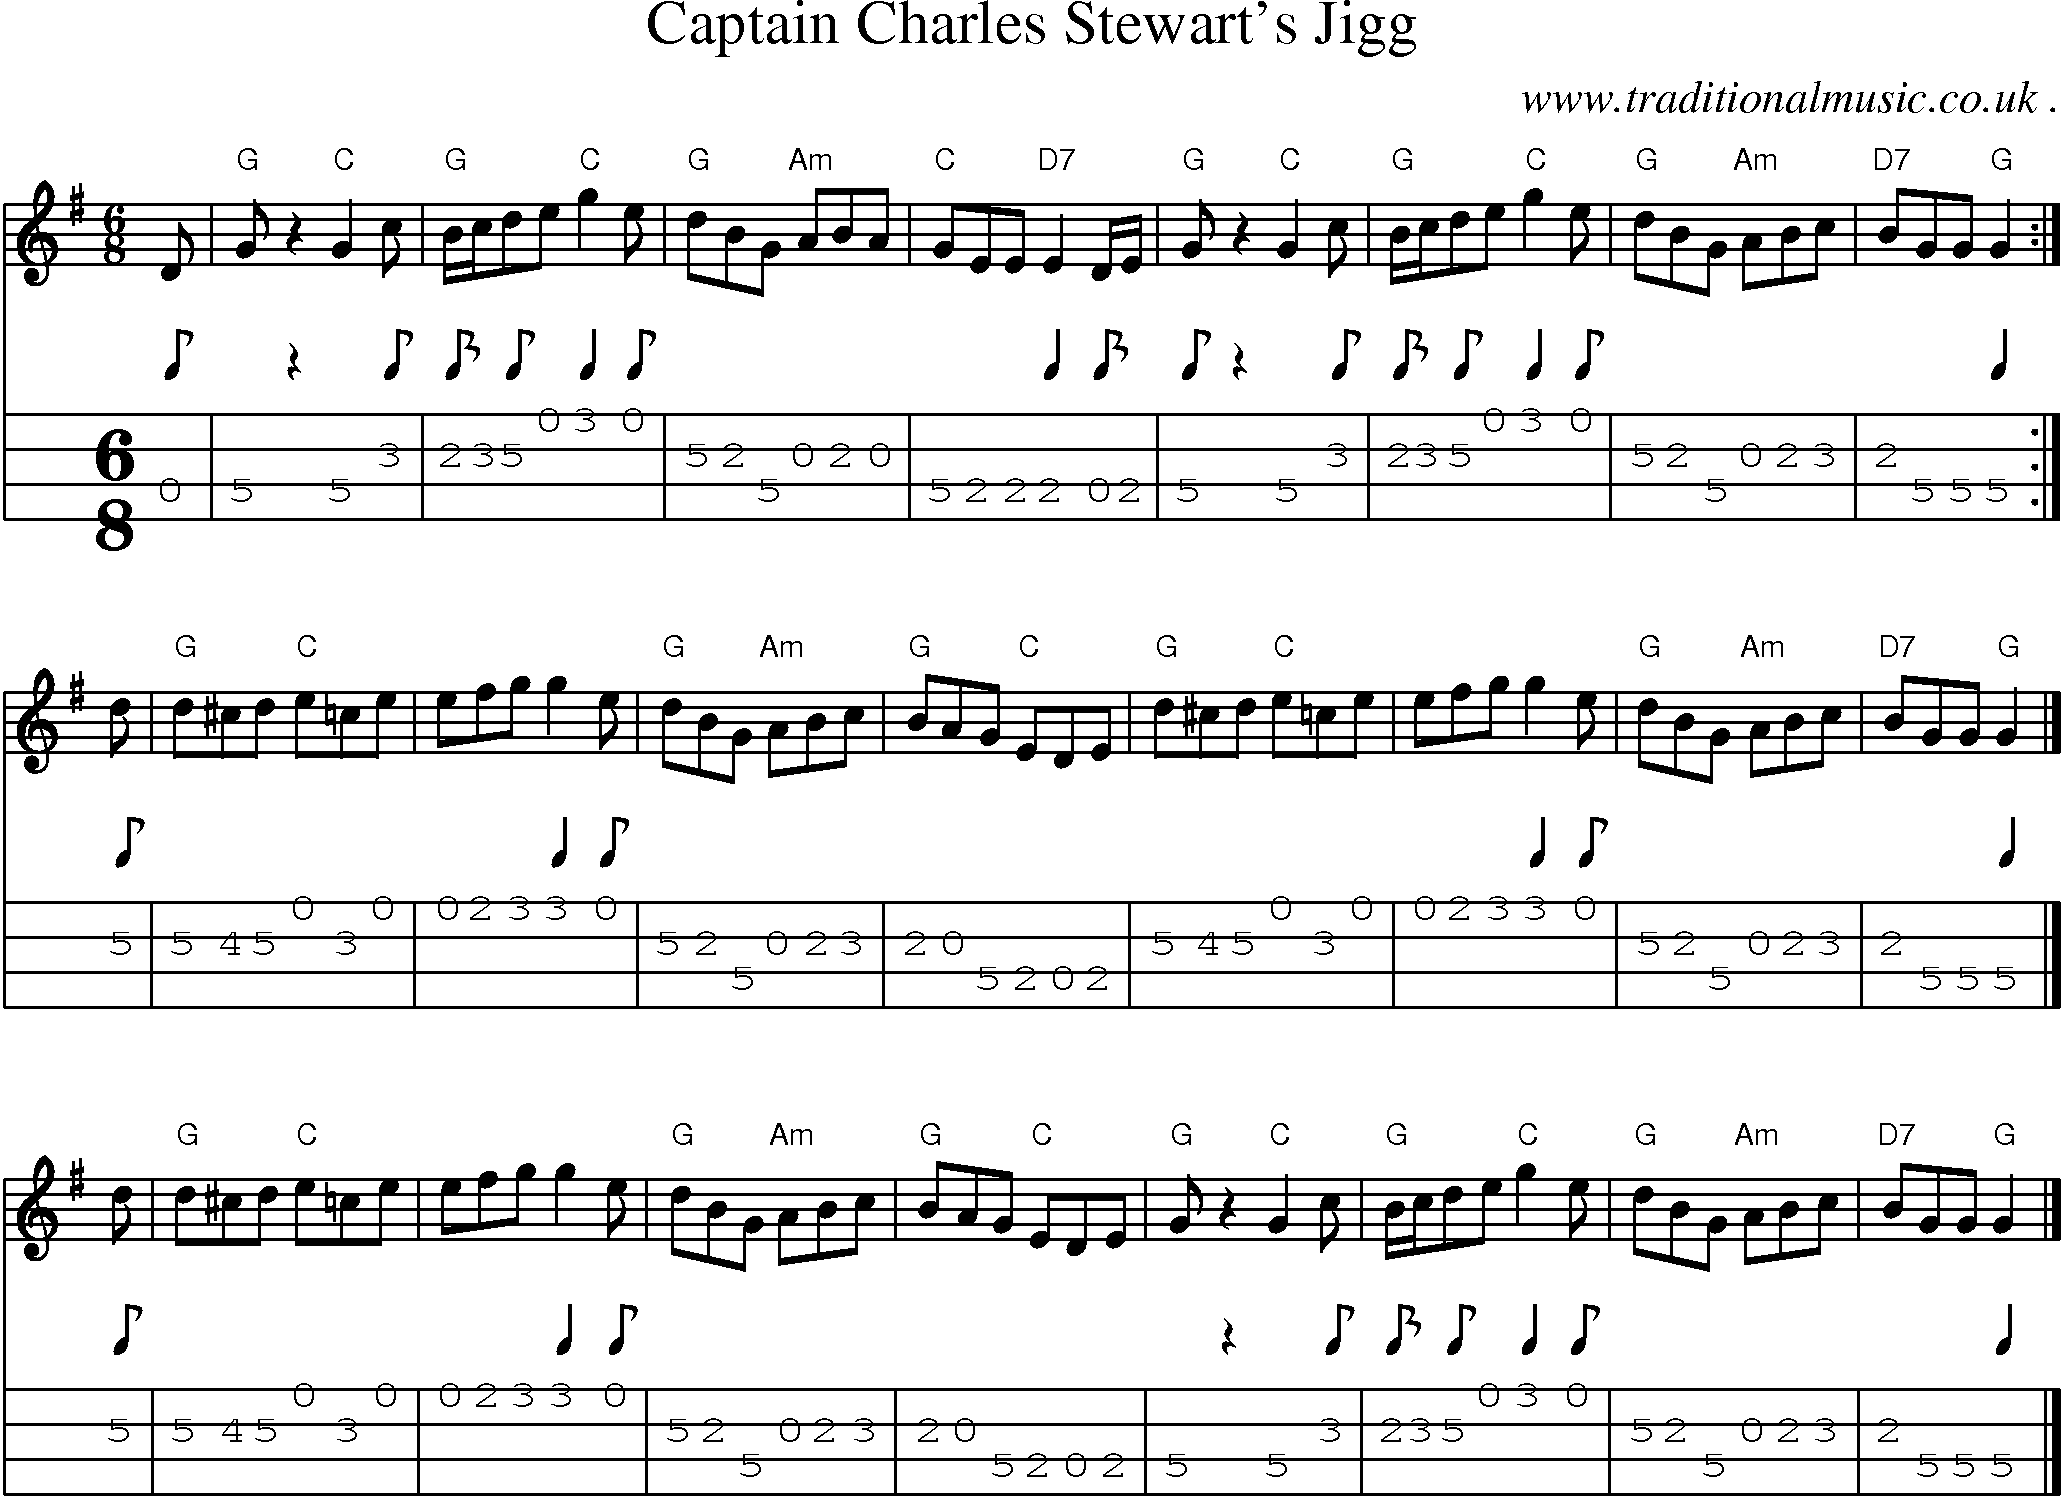 Sheet-music  score, Chords and Mandolin Tabs for Captain Charles Stewarts Jigg